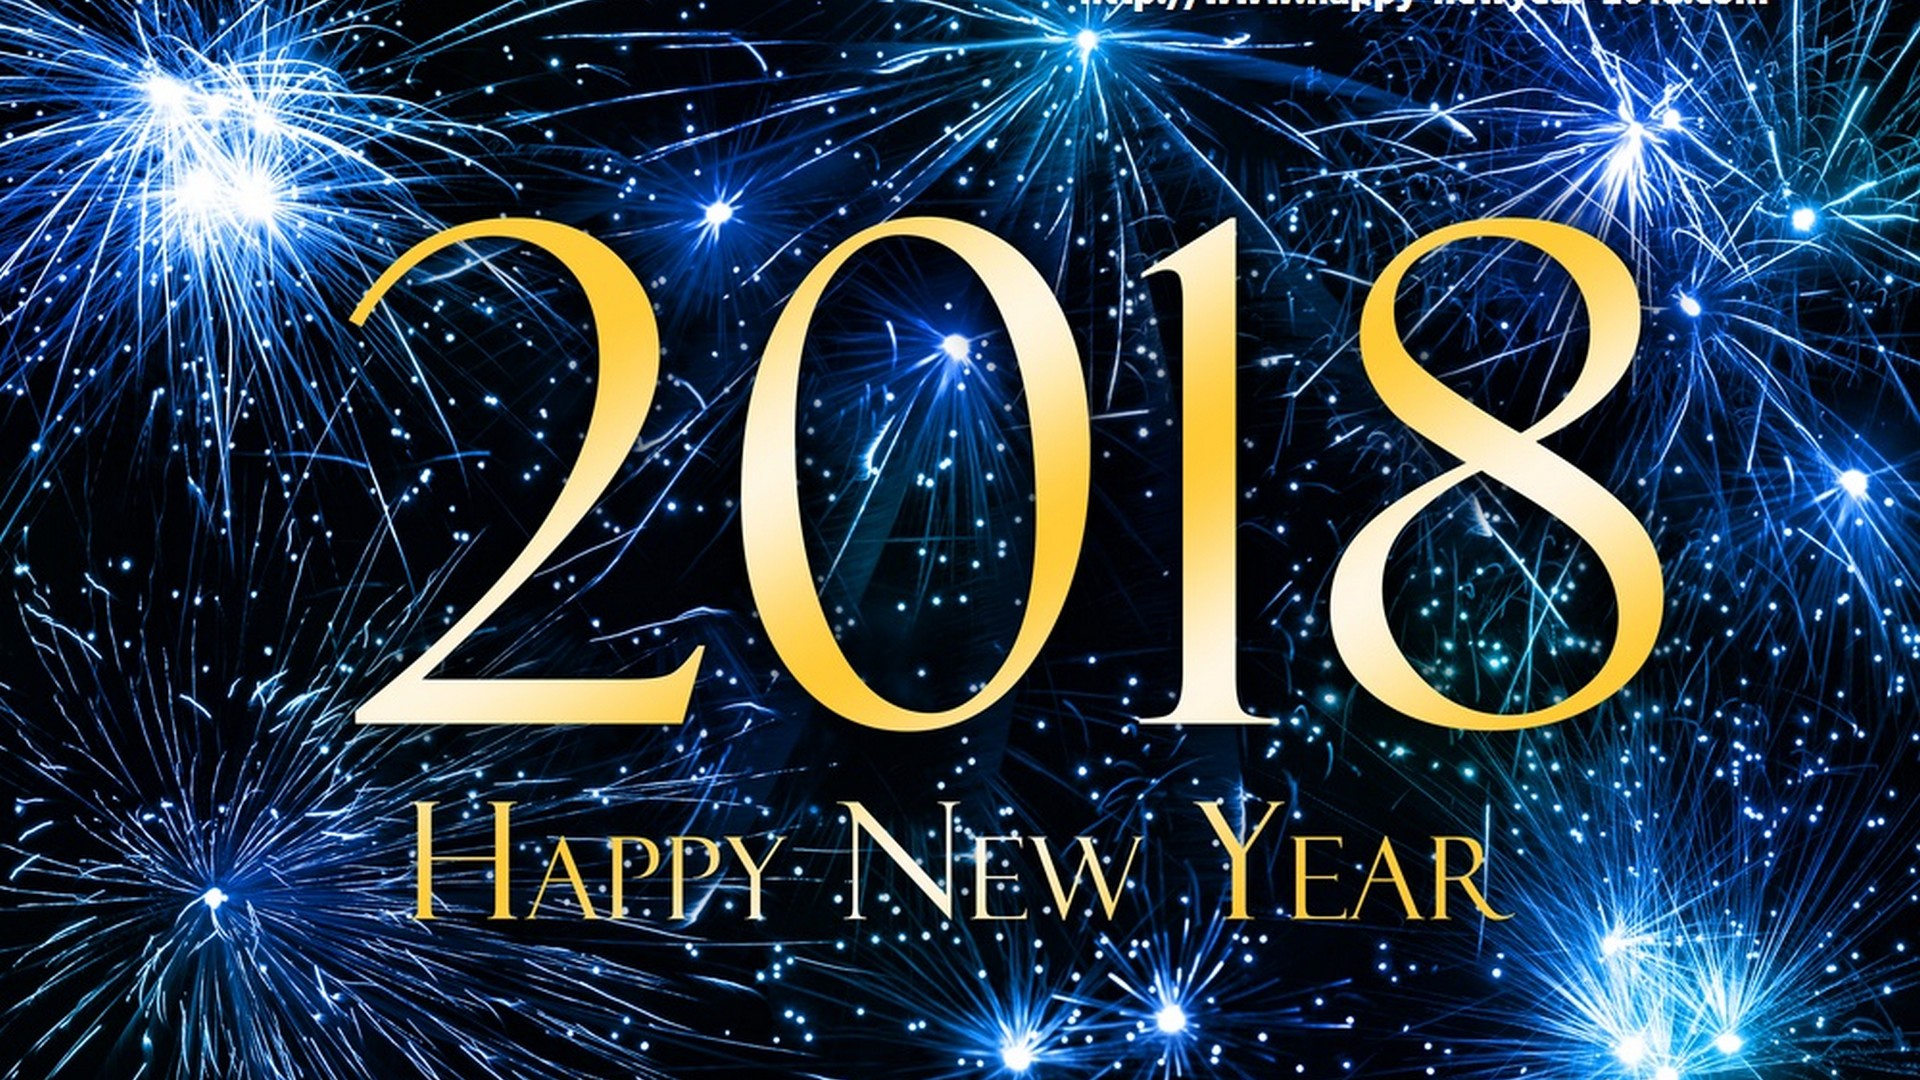 2018 Happy New Year Wallpaper 1920x1080